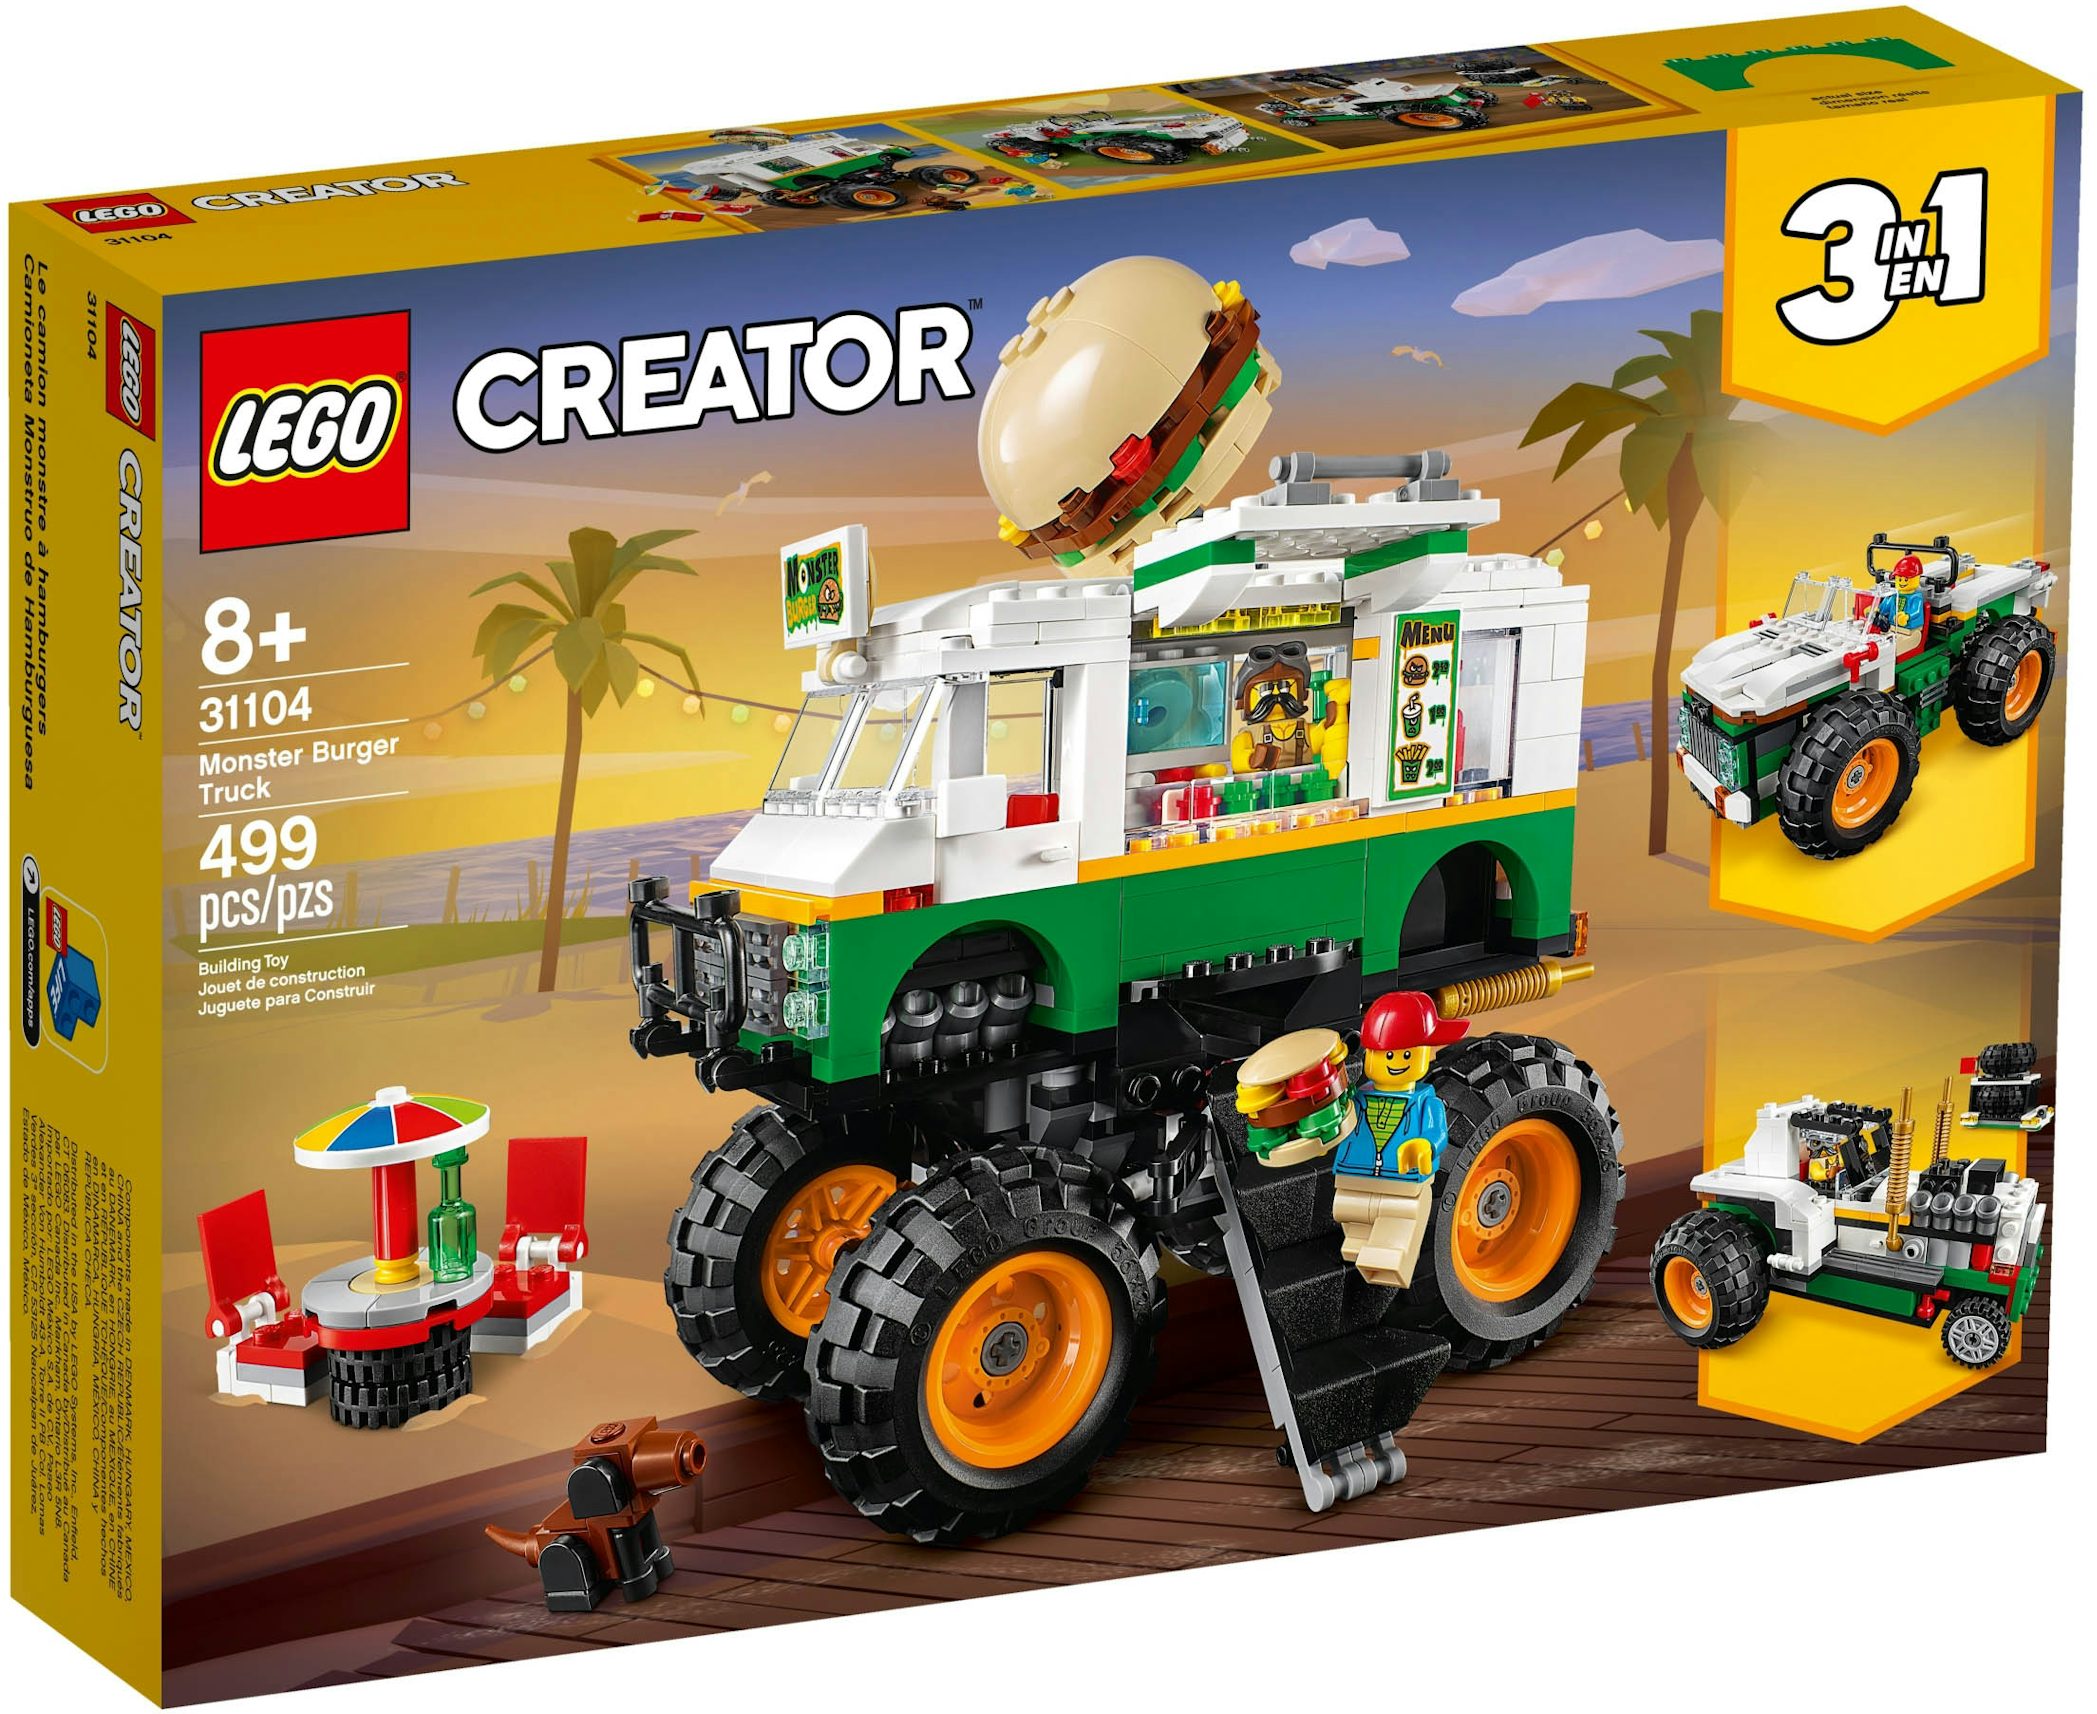 LEGO Racers Jumping Giant Monster Truck Set 8651 - US